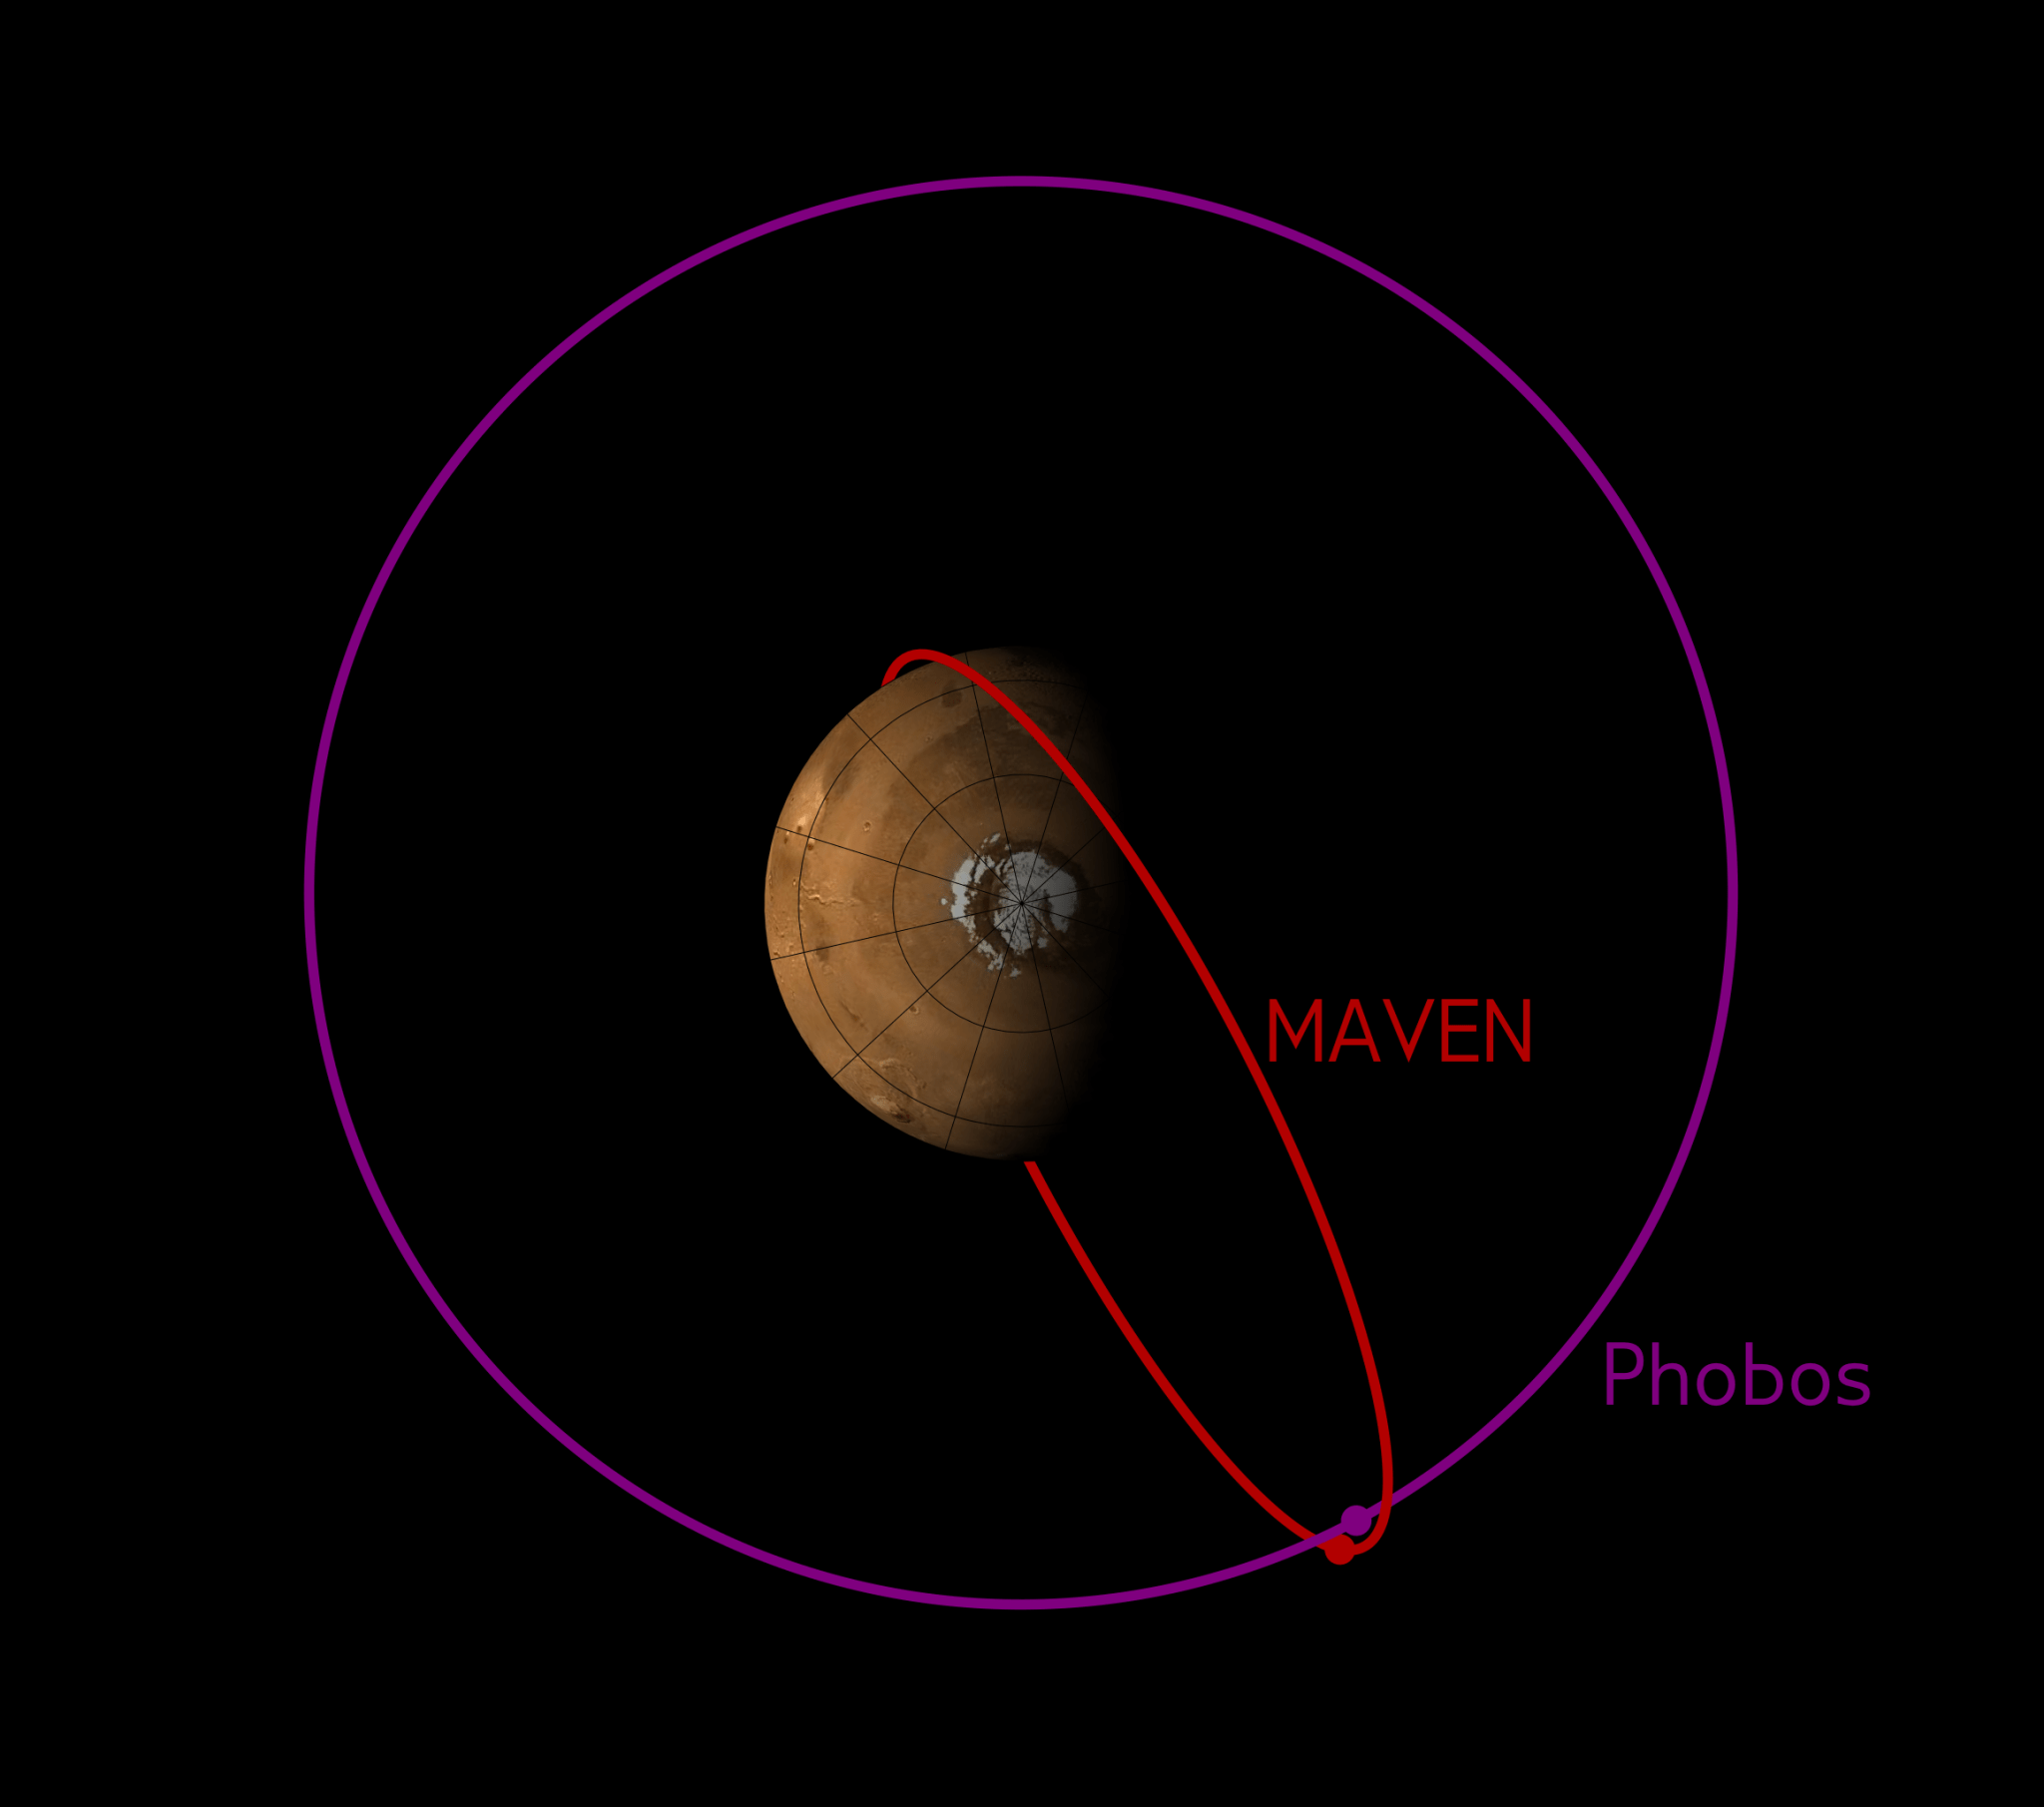 graphic of Mars, Phobos and MAVENS' orbit